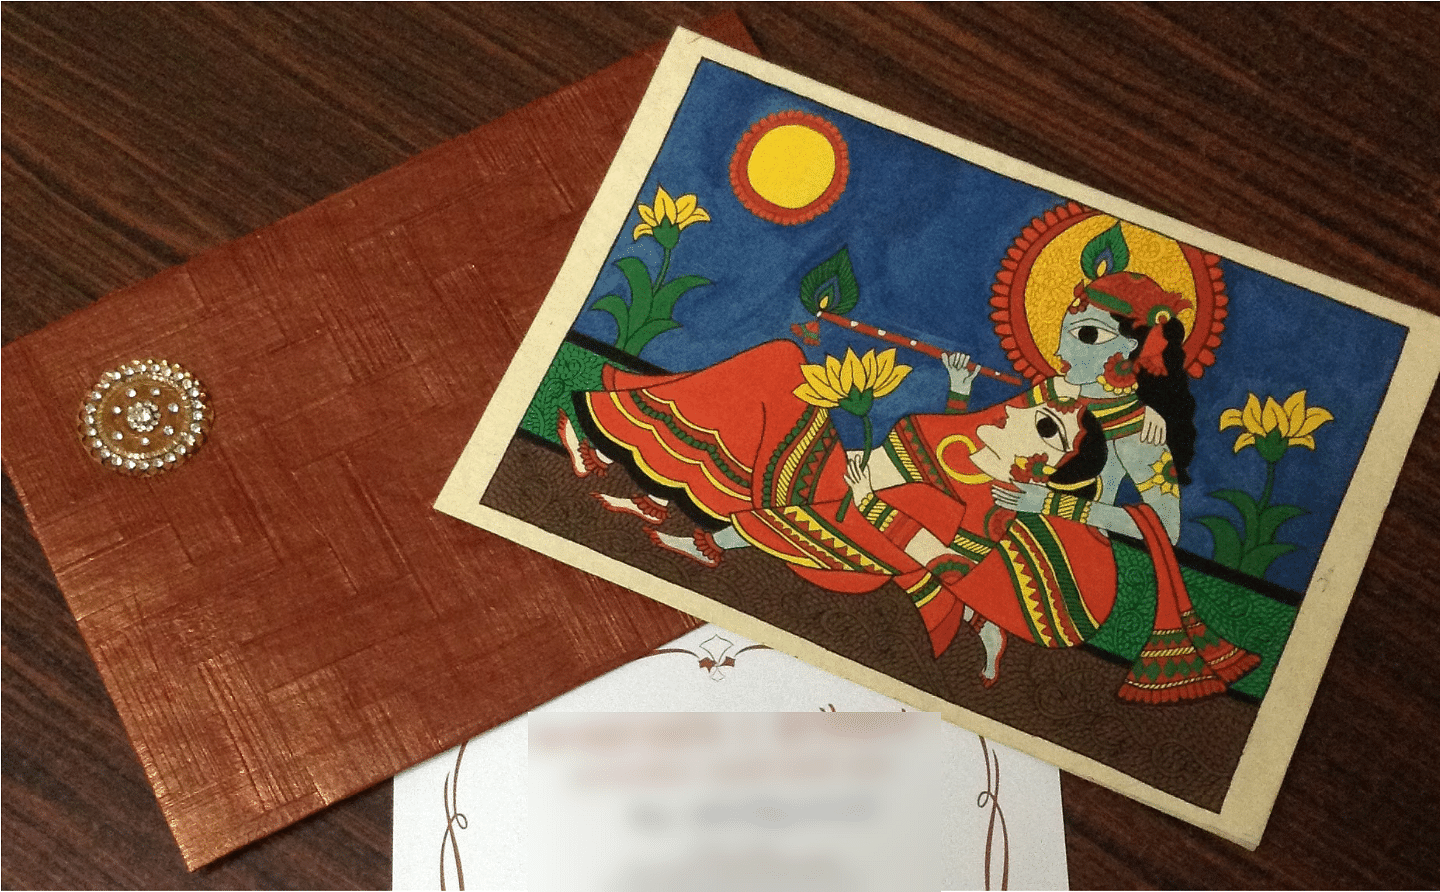 A wedding card Namratha designed for her friend.